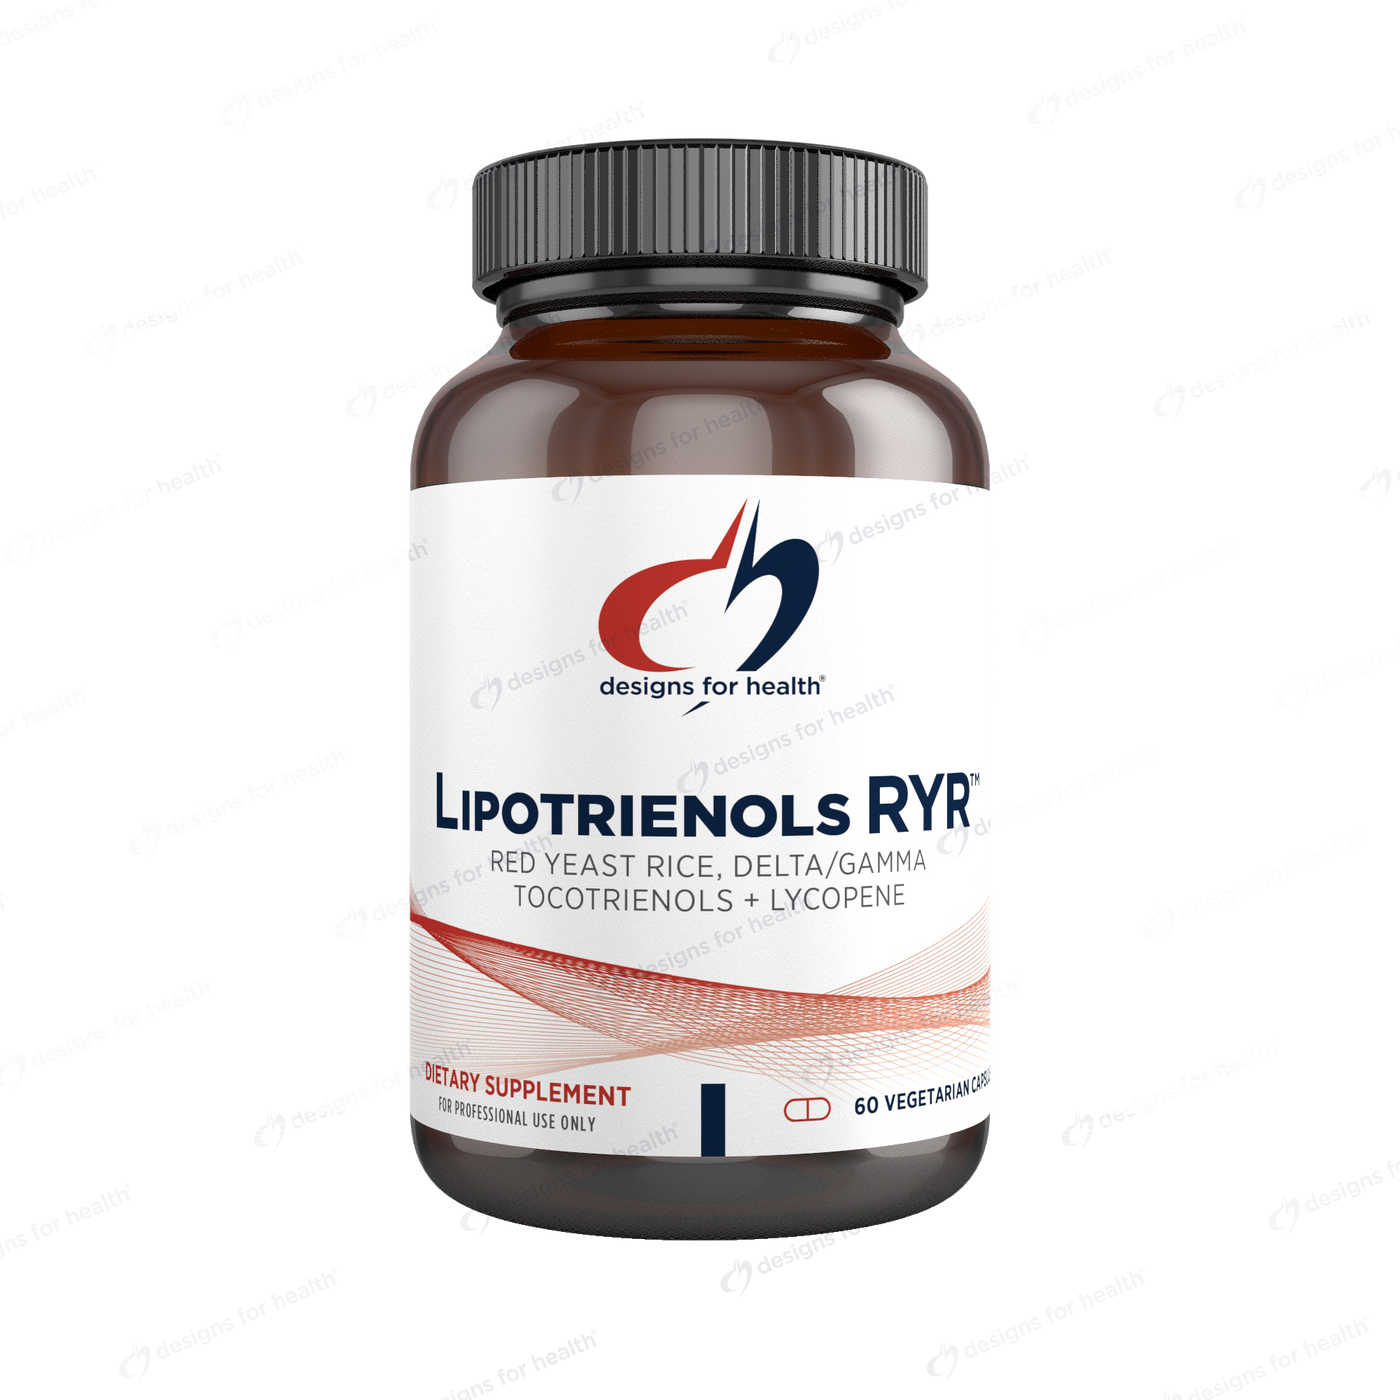 Lipotrienols RYR  Curated Wellness